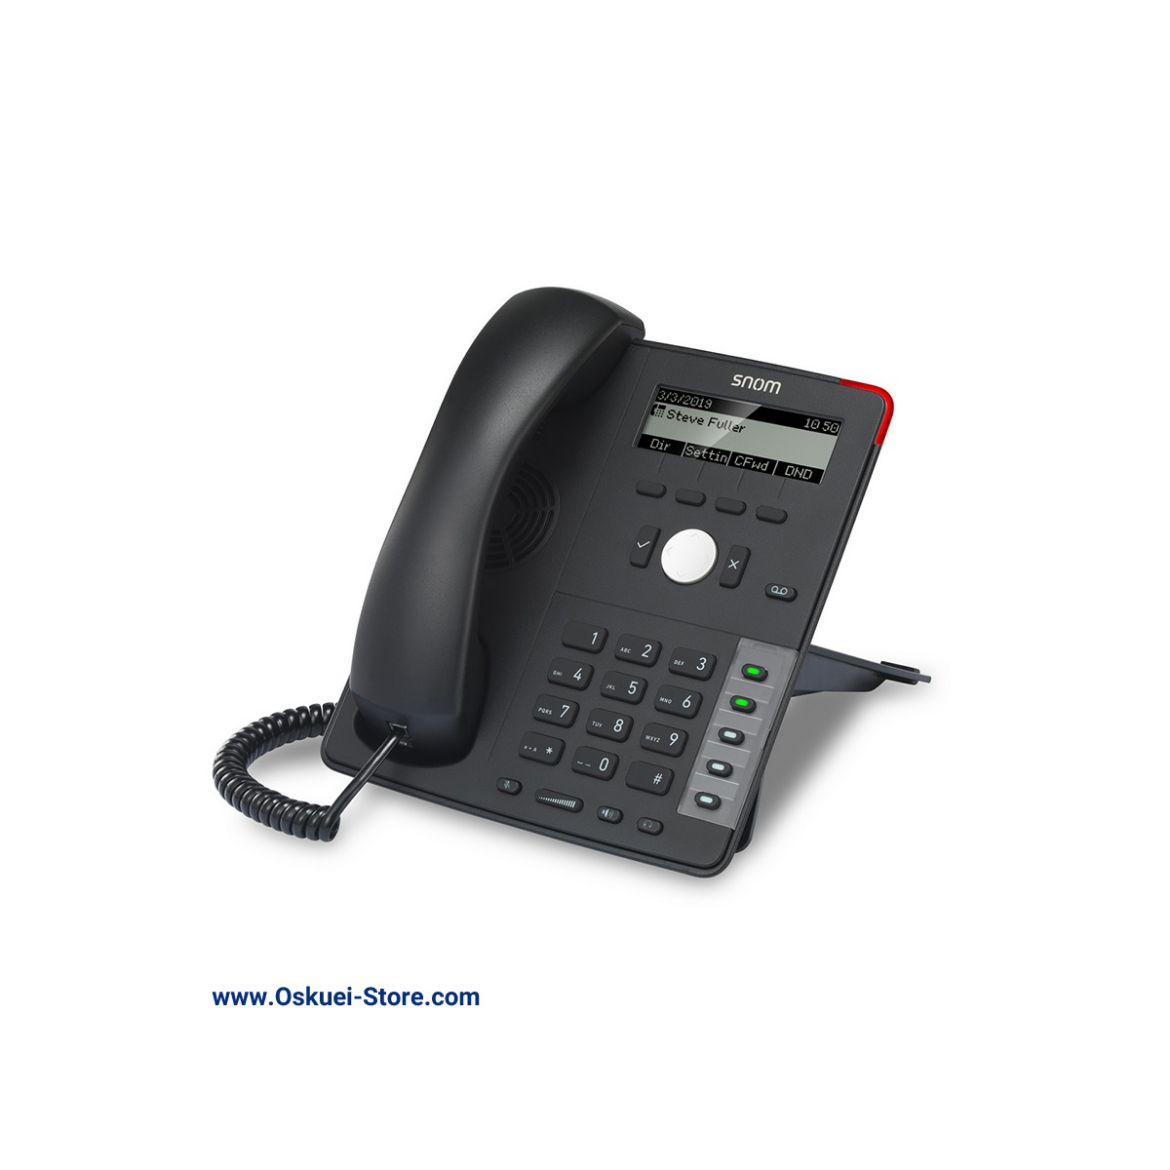 Snom D710 SIP Telephone right